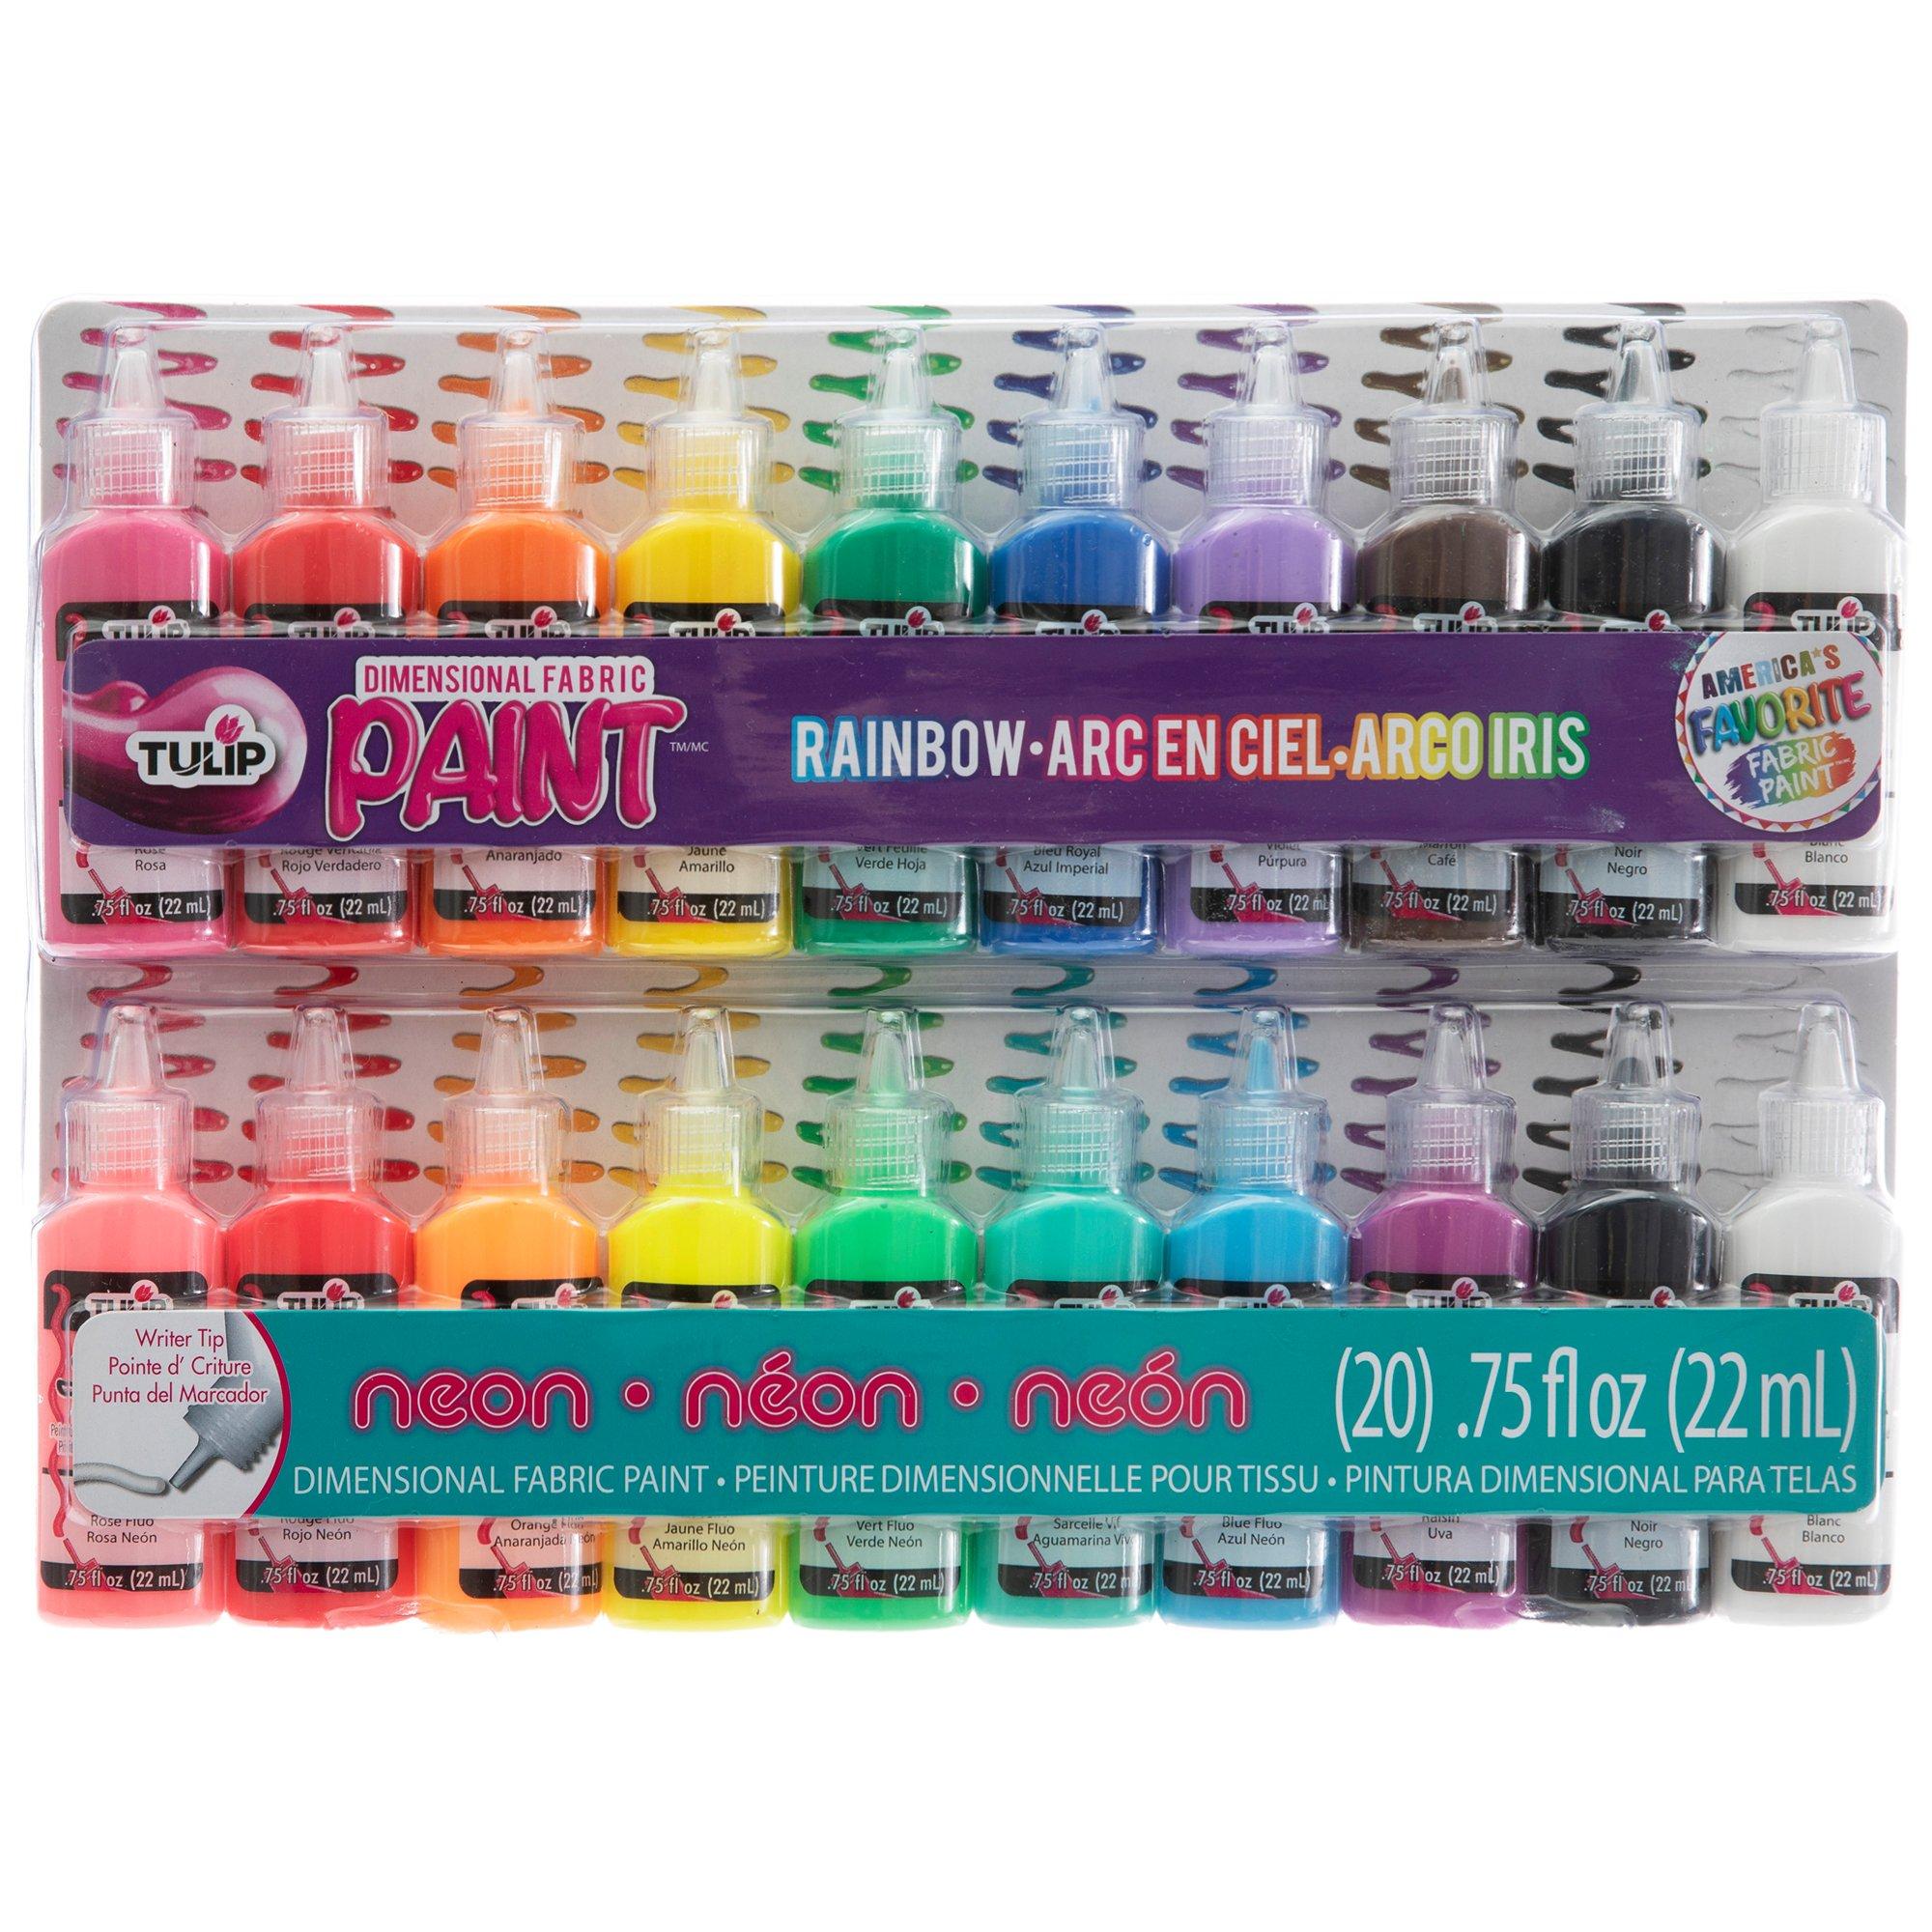 Neon Fabric Markers - 6 Piece Set, Hobby Lobby, 2295509